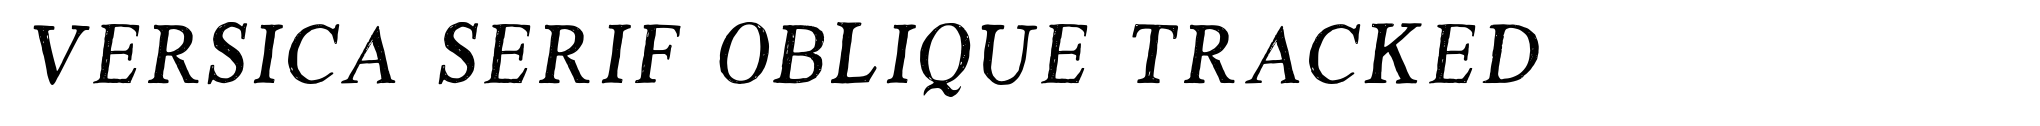 Versica Serif Oblique Tracked image